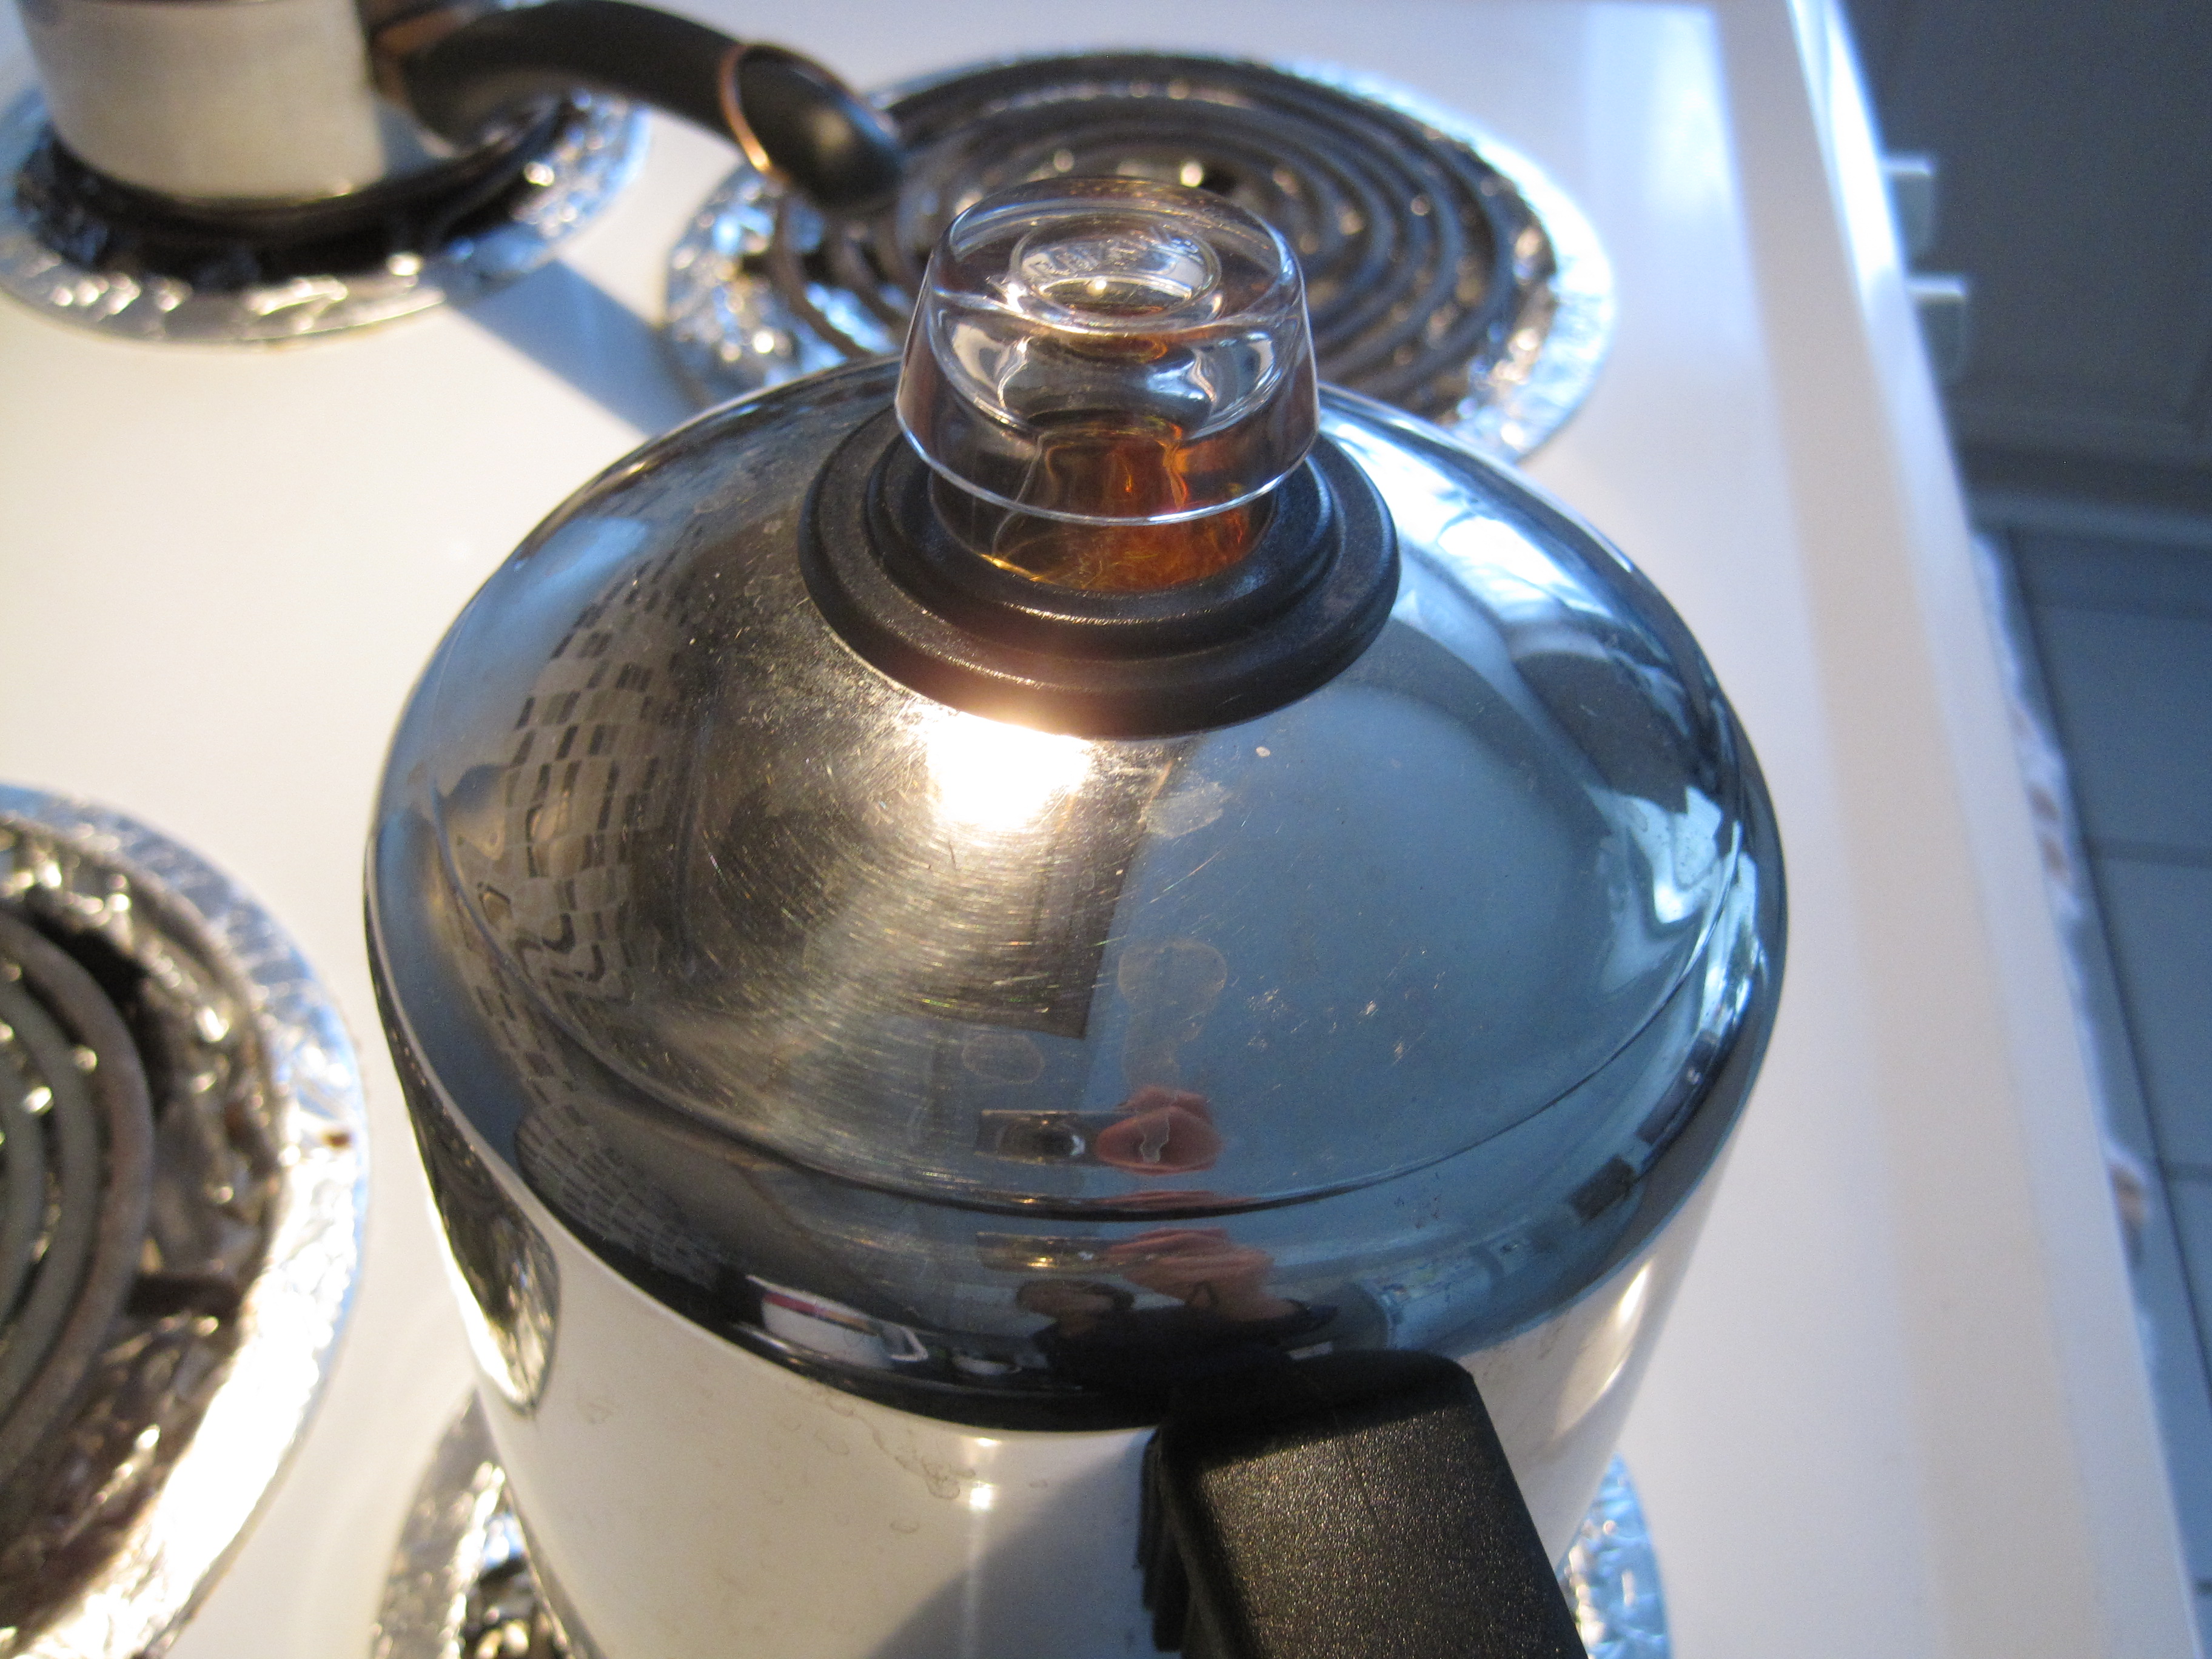 I have a small obsession with Farberware percolator coffee pots